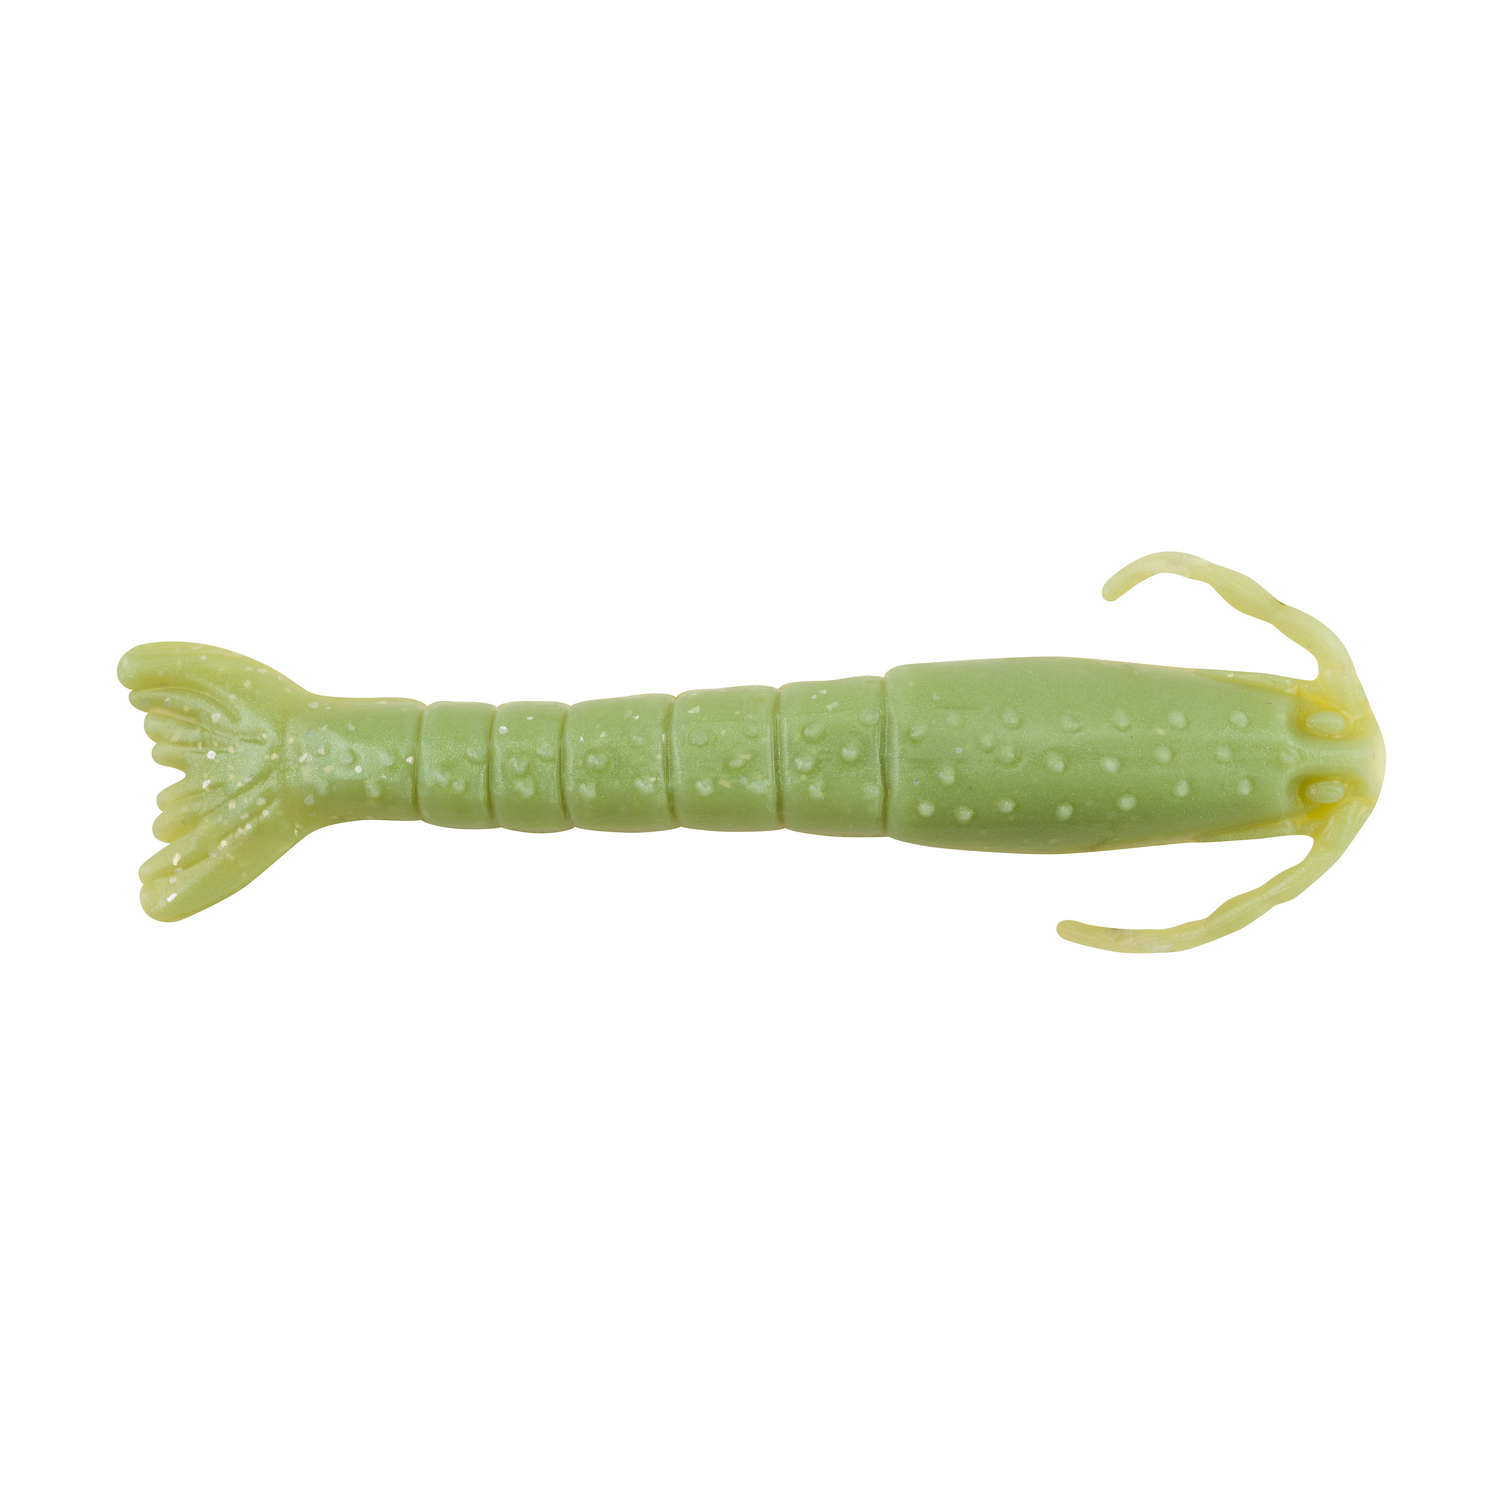 Brand New - Berkley Gulp 2 Shrimp Soft Plastic Fishing Lure